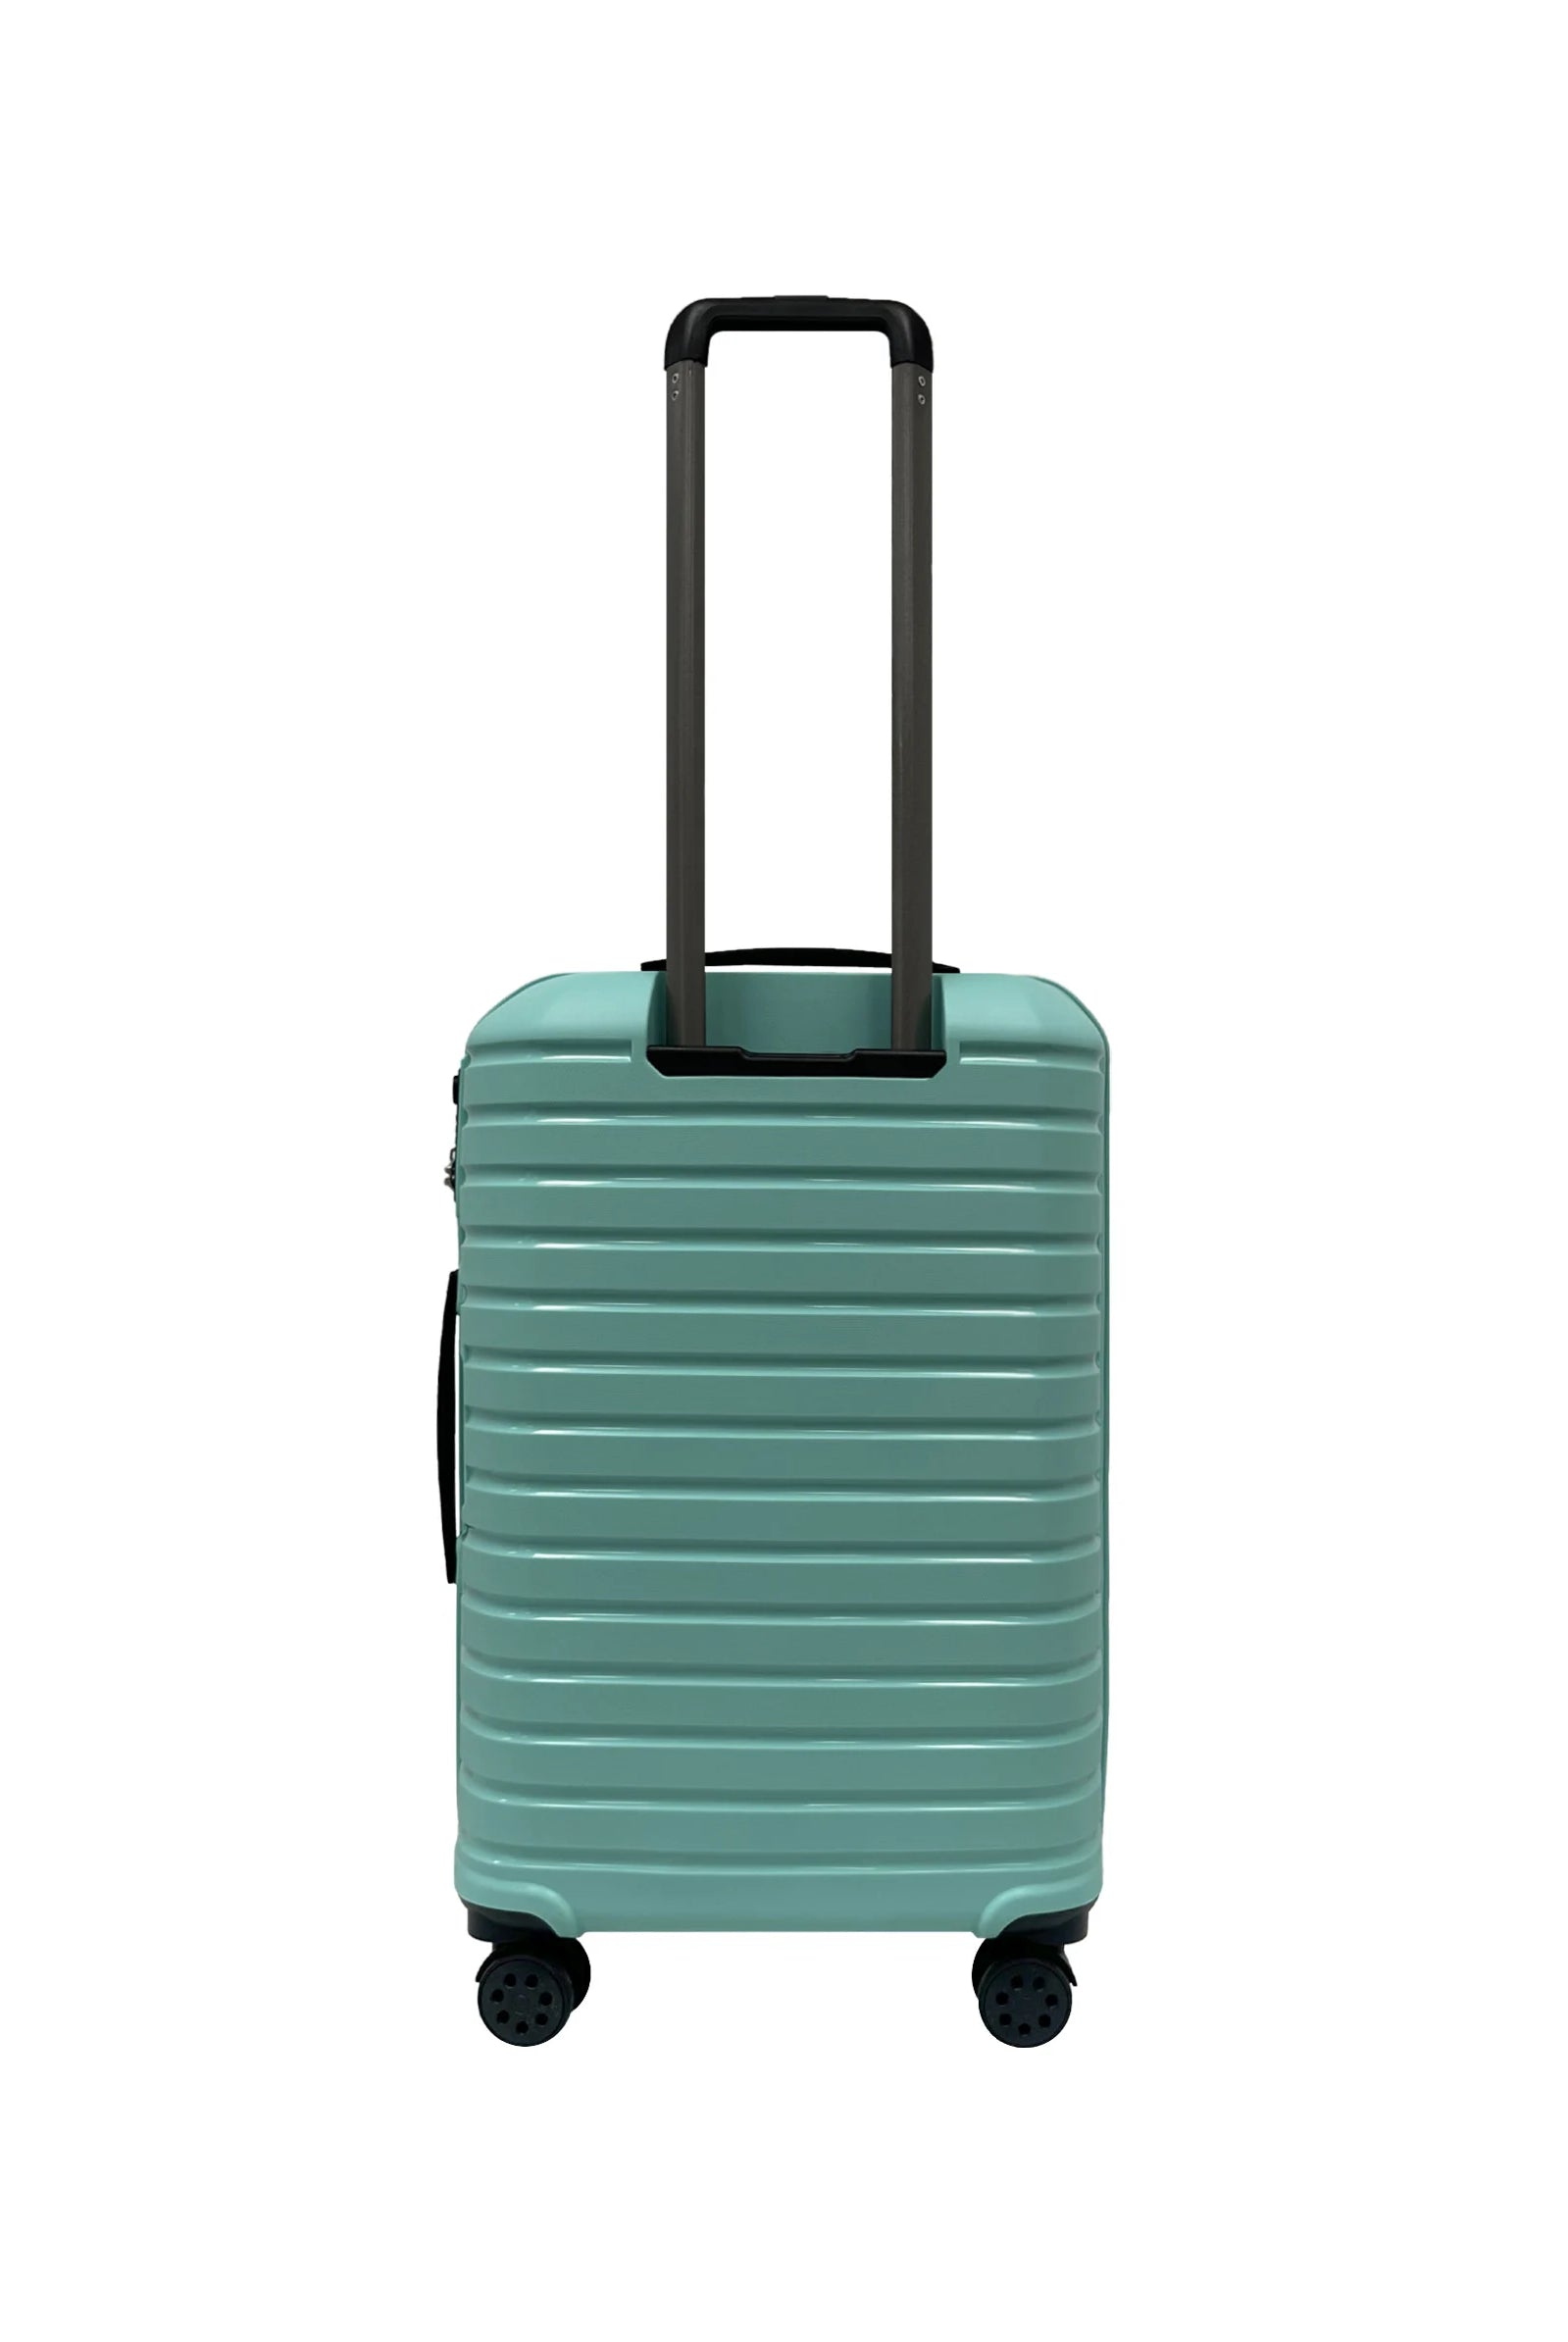 Medium size hard shell green suitcase